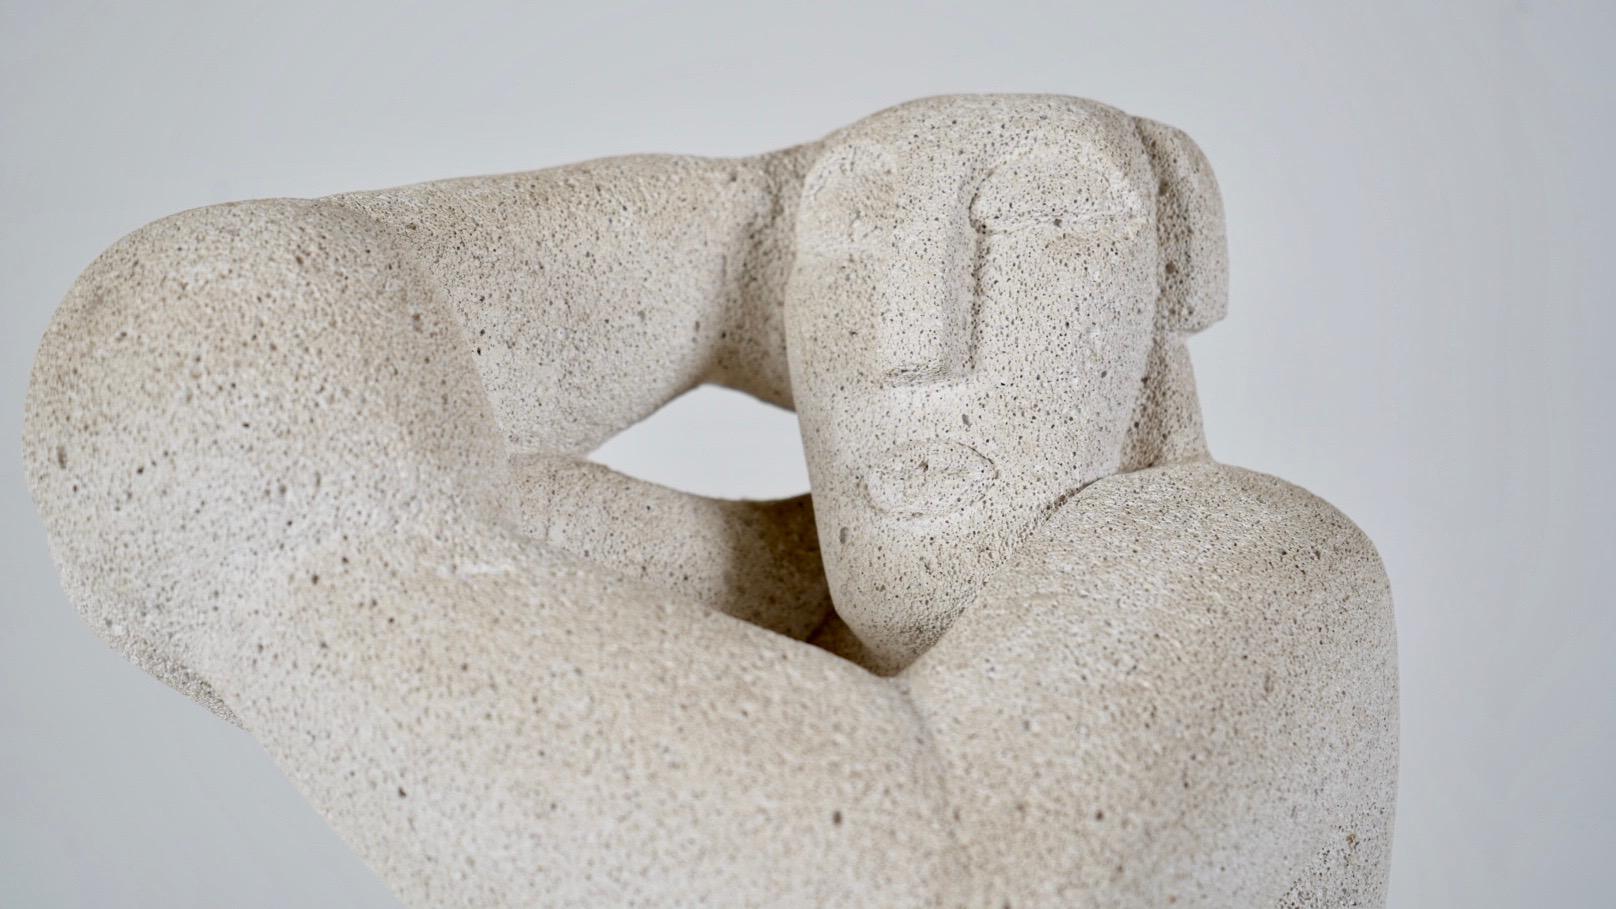 Tuff Stone Sculpture Henri Gaudier-Brzeska 1